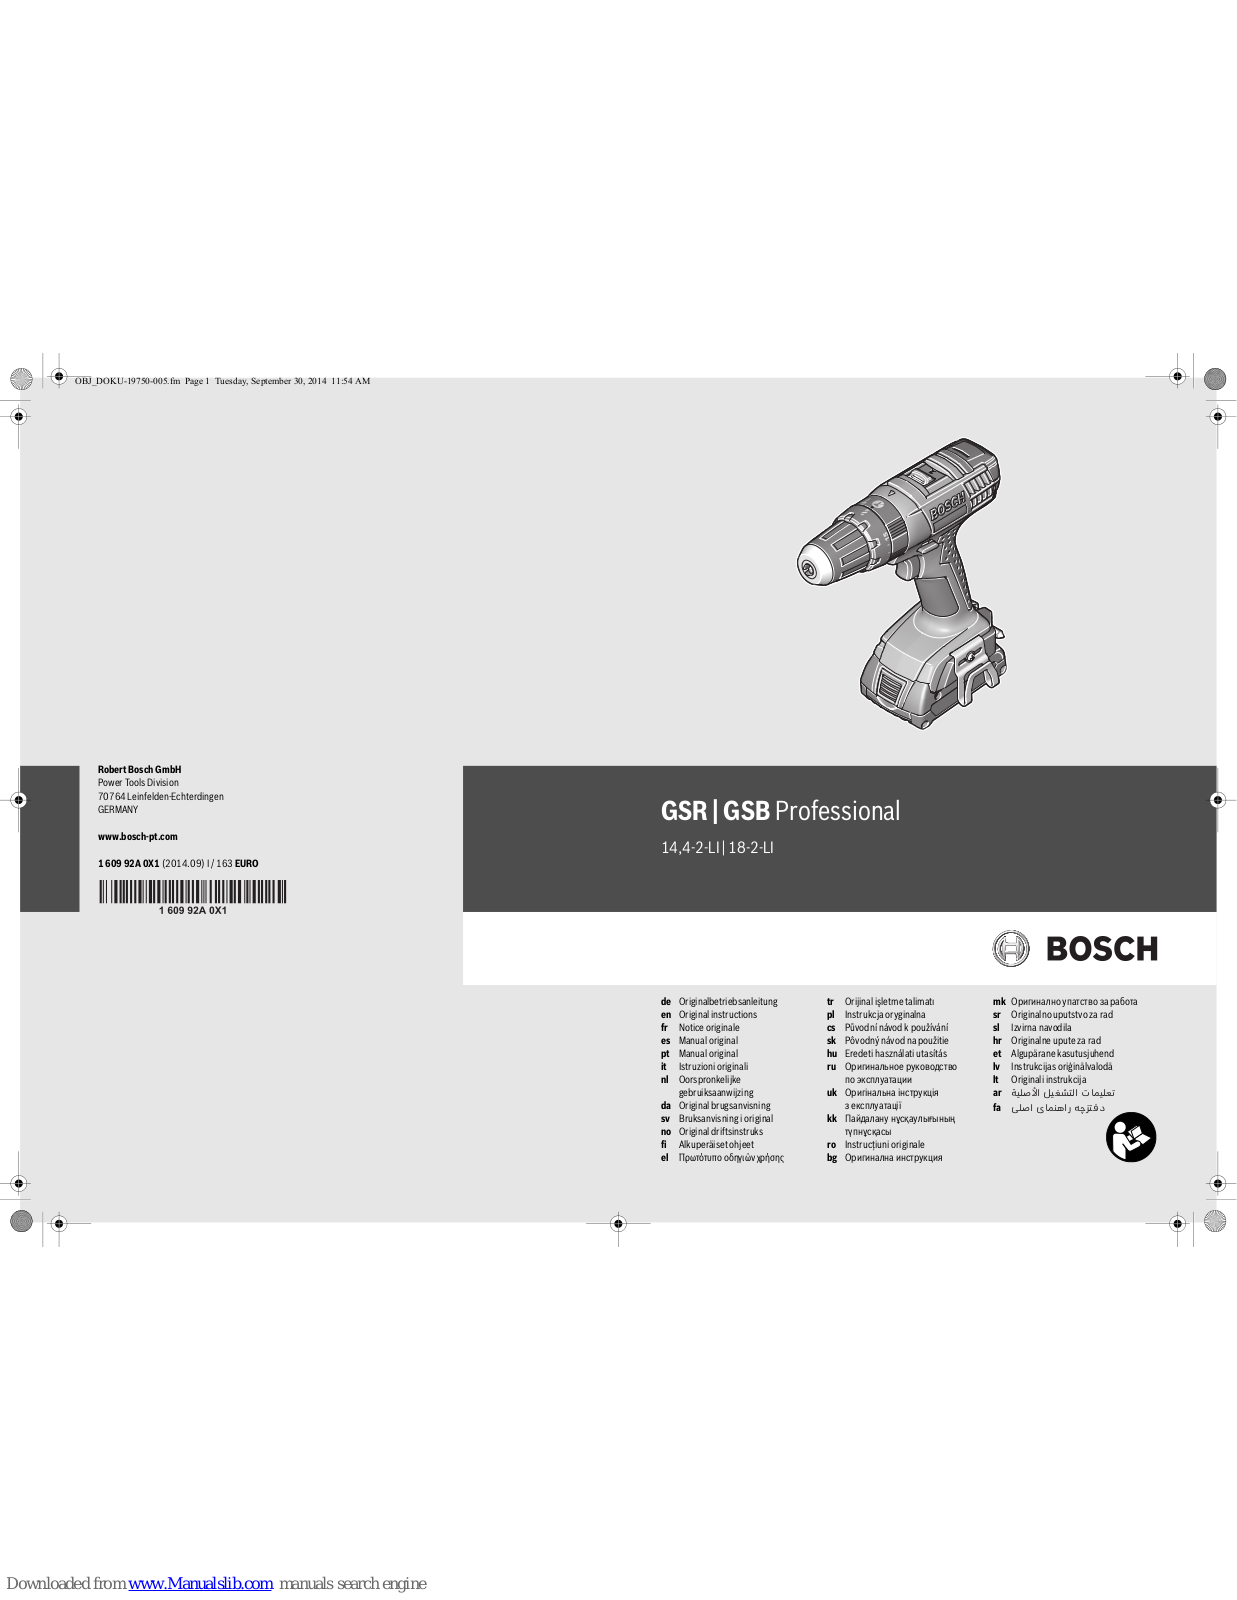 Bosch GSB Professional 14.4 2-LI, GSB Professional 18 2-LI, GSR Professional 14.4 2-LI, GSR Professional 18 2-LI Original Instructions Manual